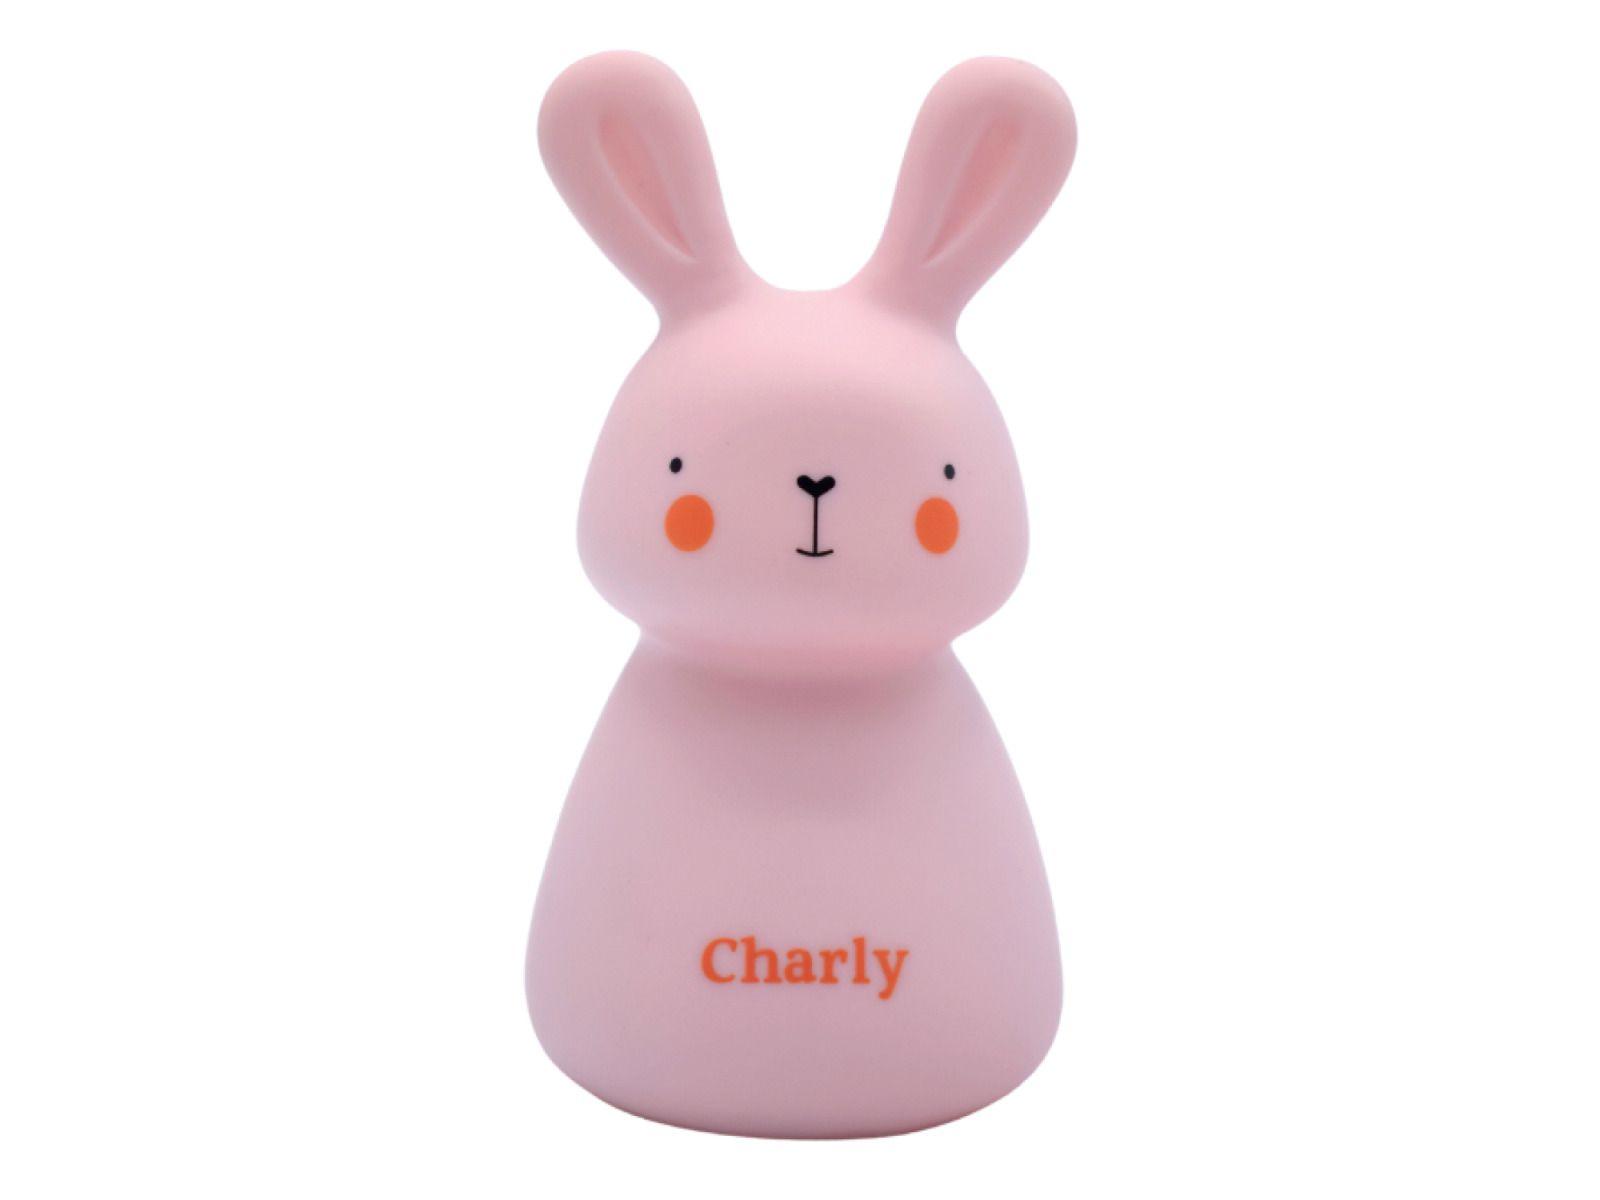 LED bedside lamp Olala - Charly Bunny, pink